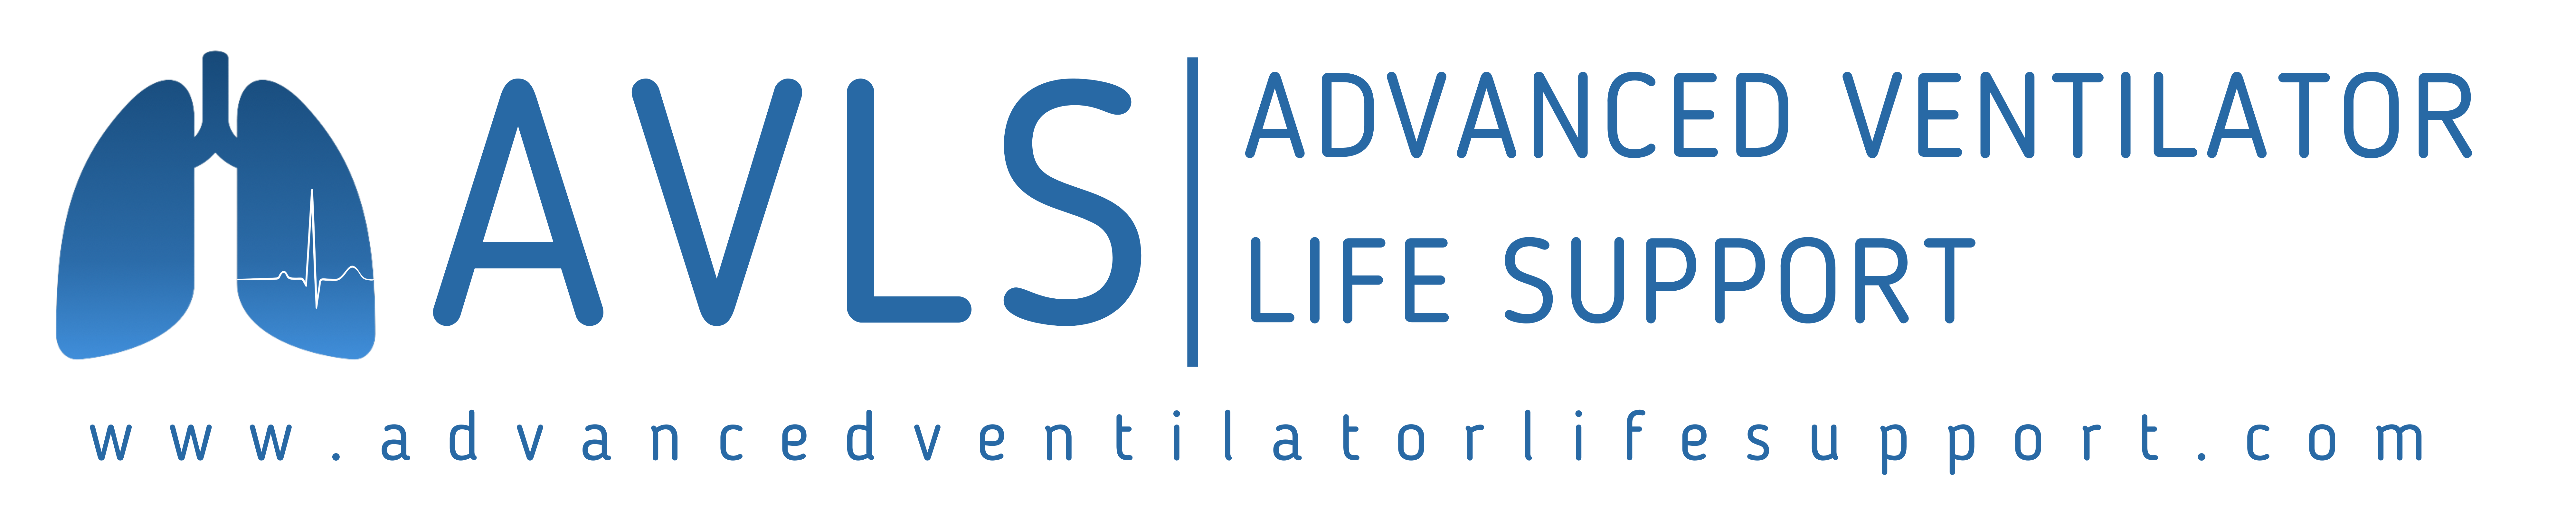 Advanced Ventilator Life Support